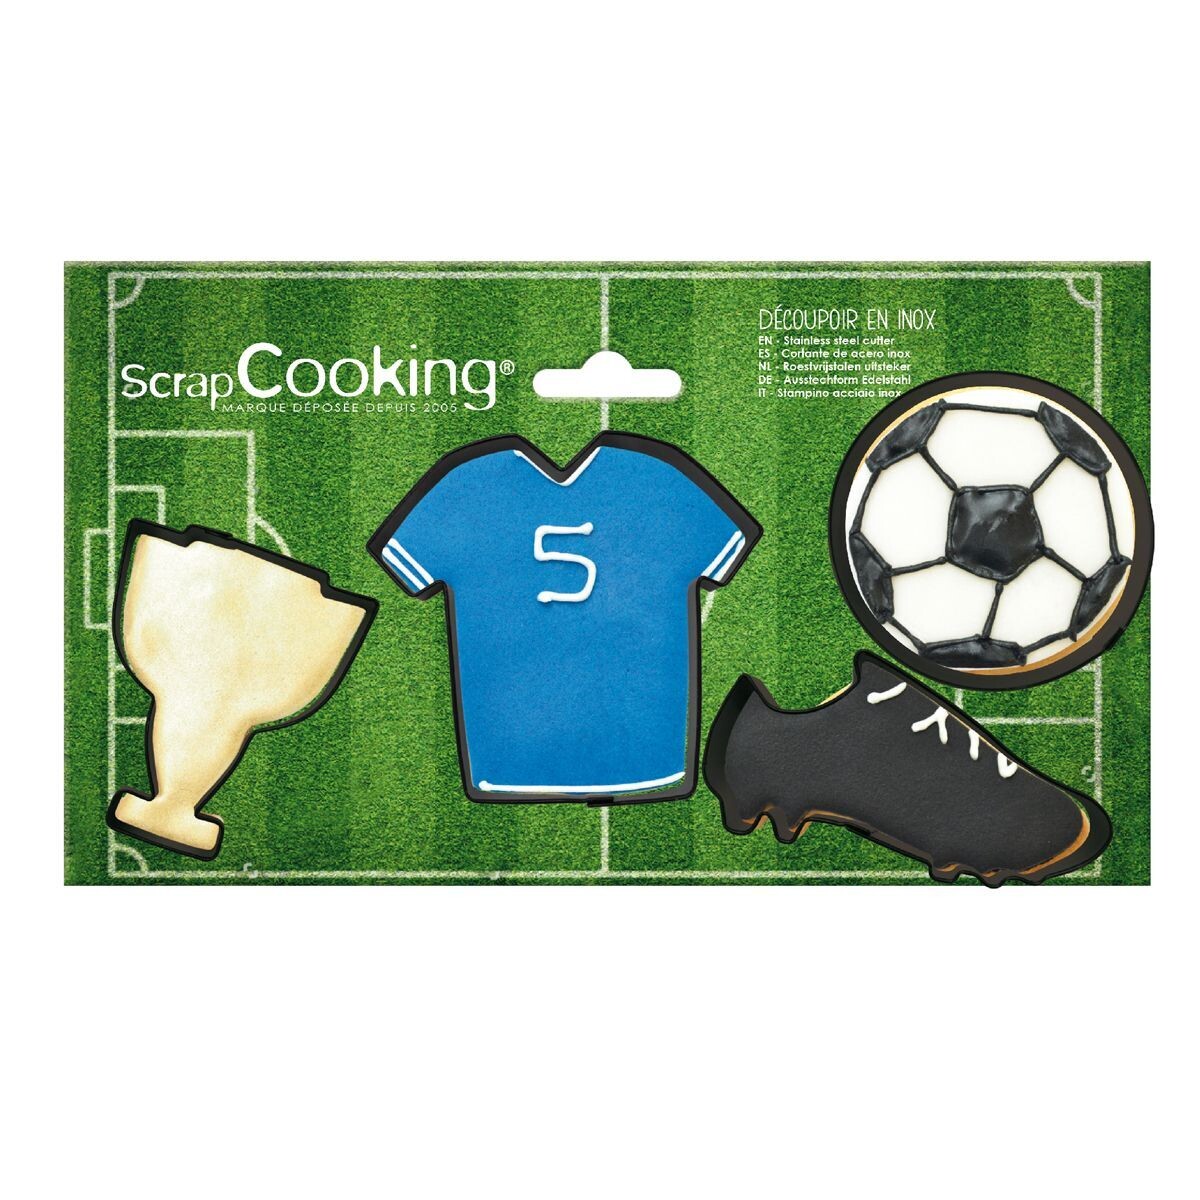 ScrapCooking Cookie Cutters Football 4 τμχ - Σετ 4 μεταλλικά κουπ πατ με θέμα το Ποδόσφαιρο